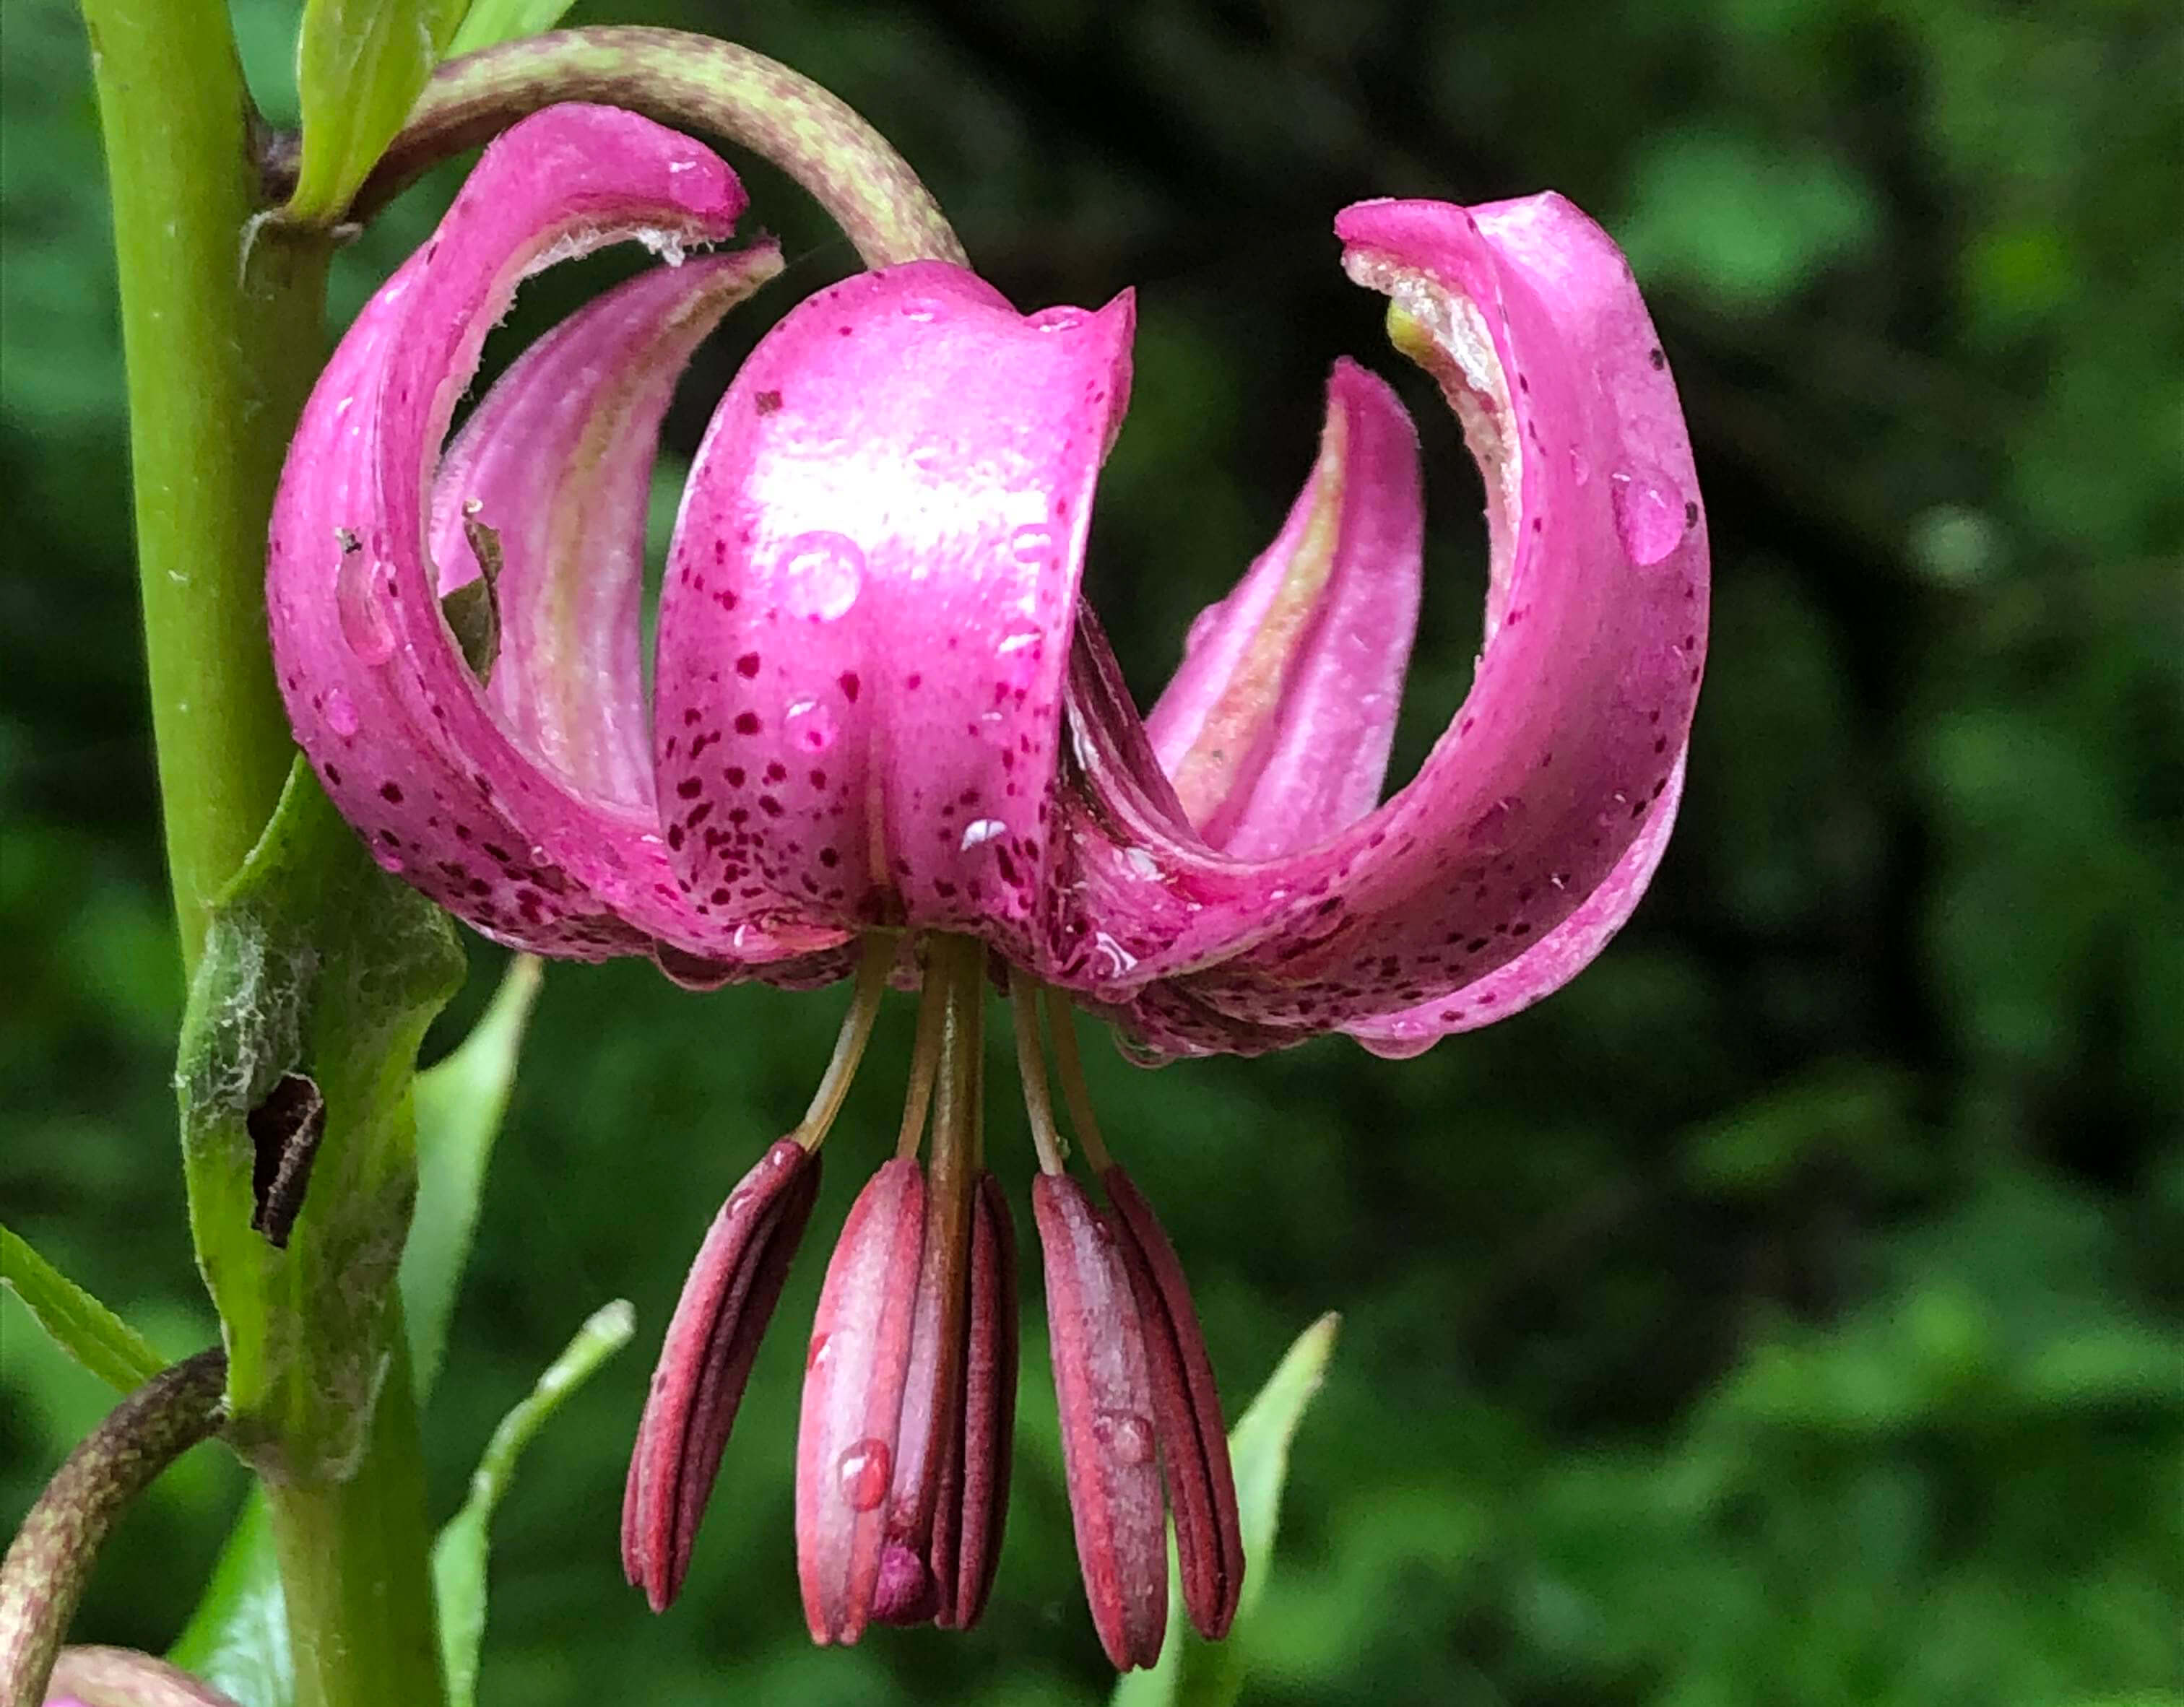 Martagon lilies